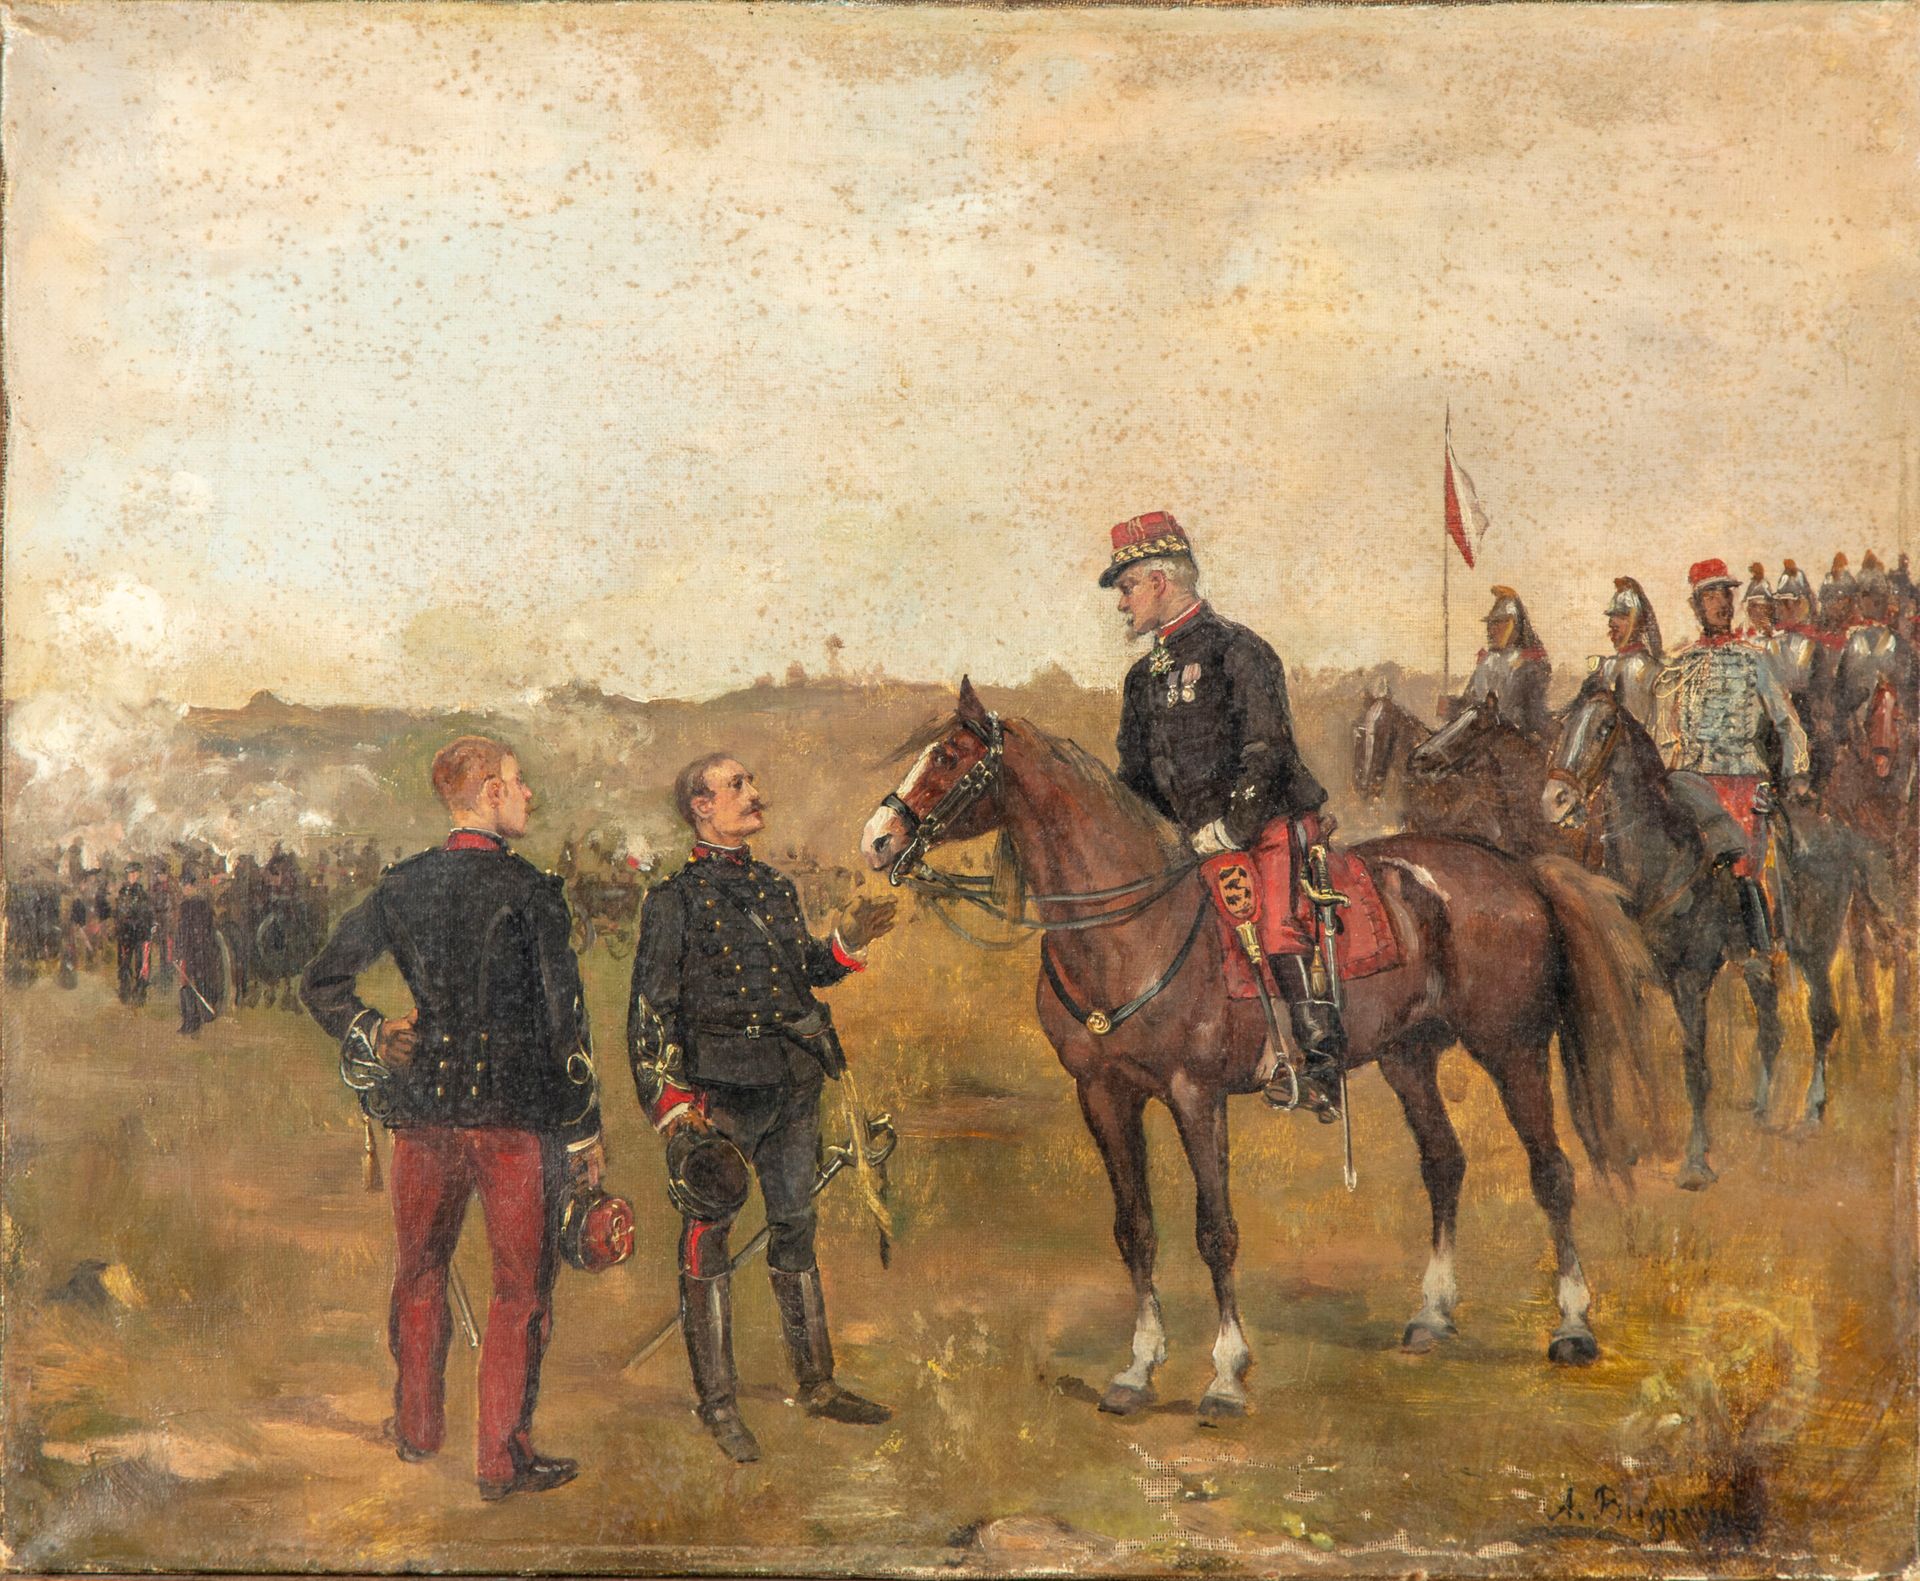 BLIGNY 阿尔贝-布利尼 (1849-1908)

1870年战争期间的军事场景

布面油画，右下角有签名

38 x 46 厘米

缺少材料、修复